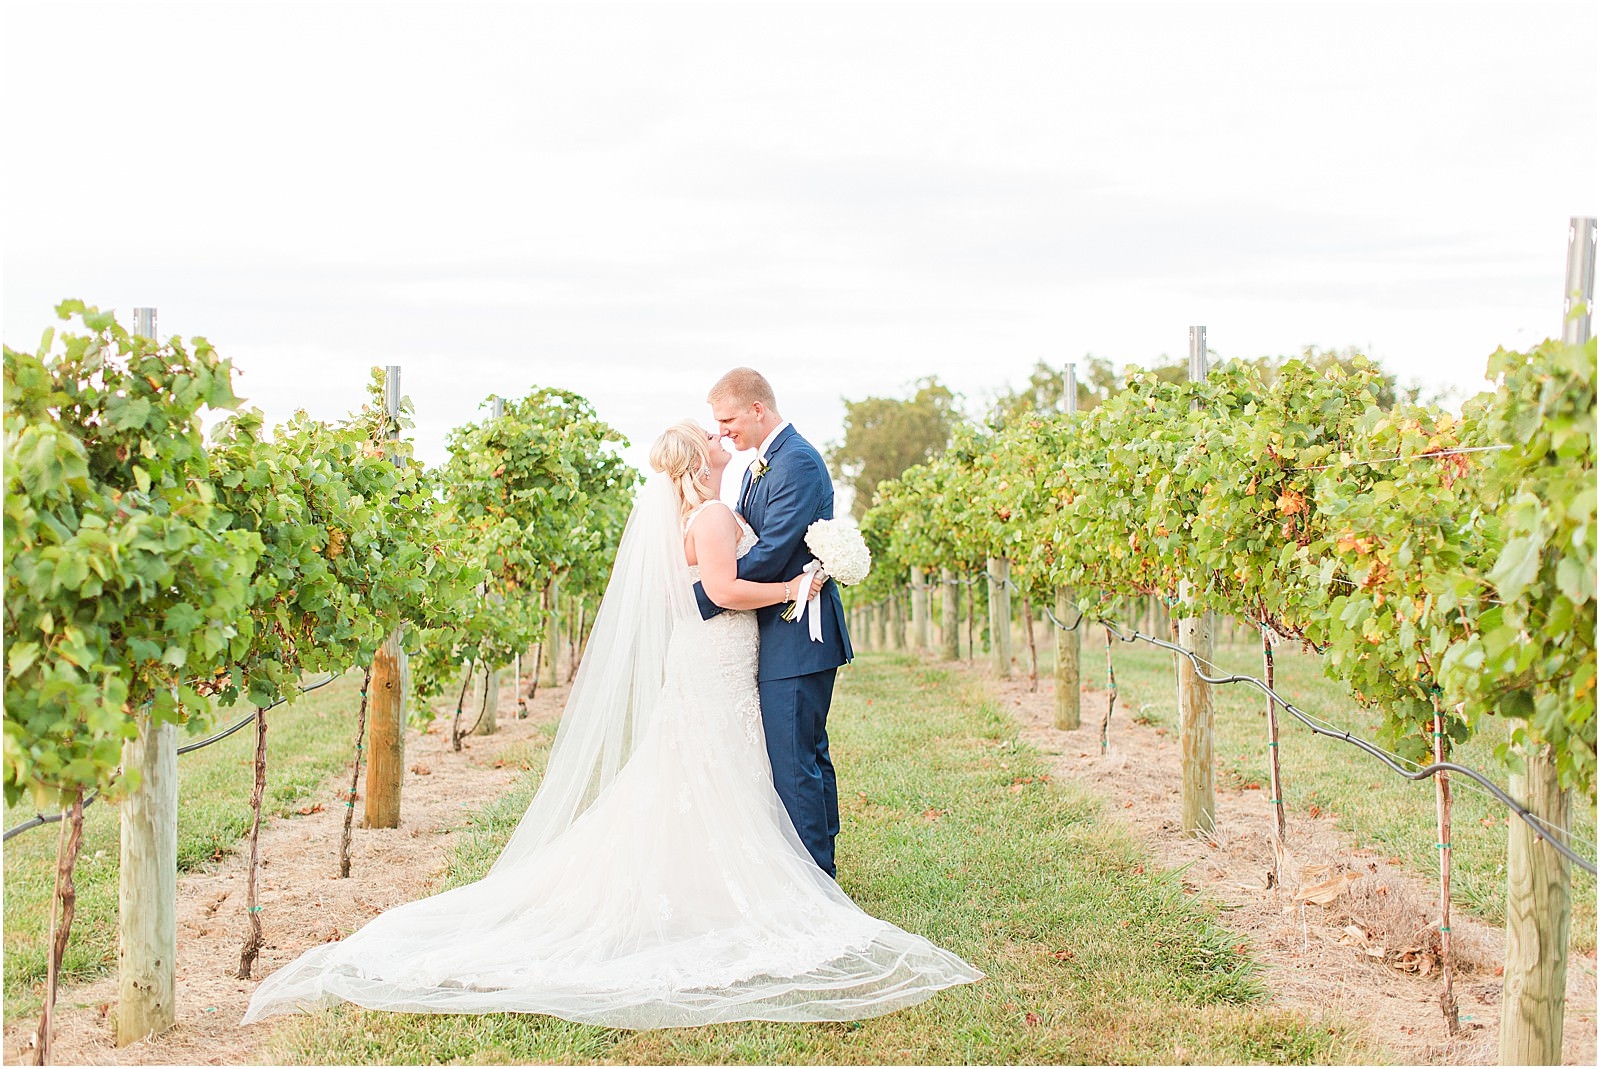 Kelsey and Caleb | Walkers Bluff Winery Wedding | Bret and Brandie Photography095.jpg